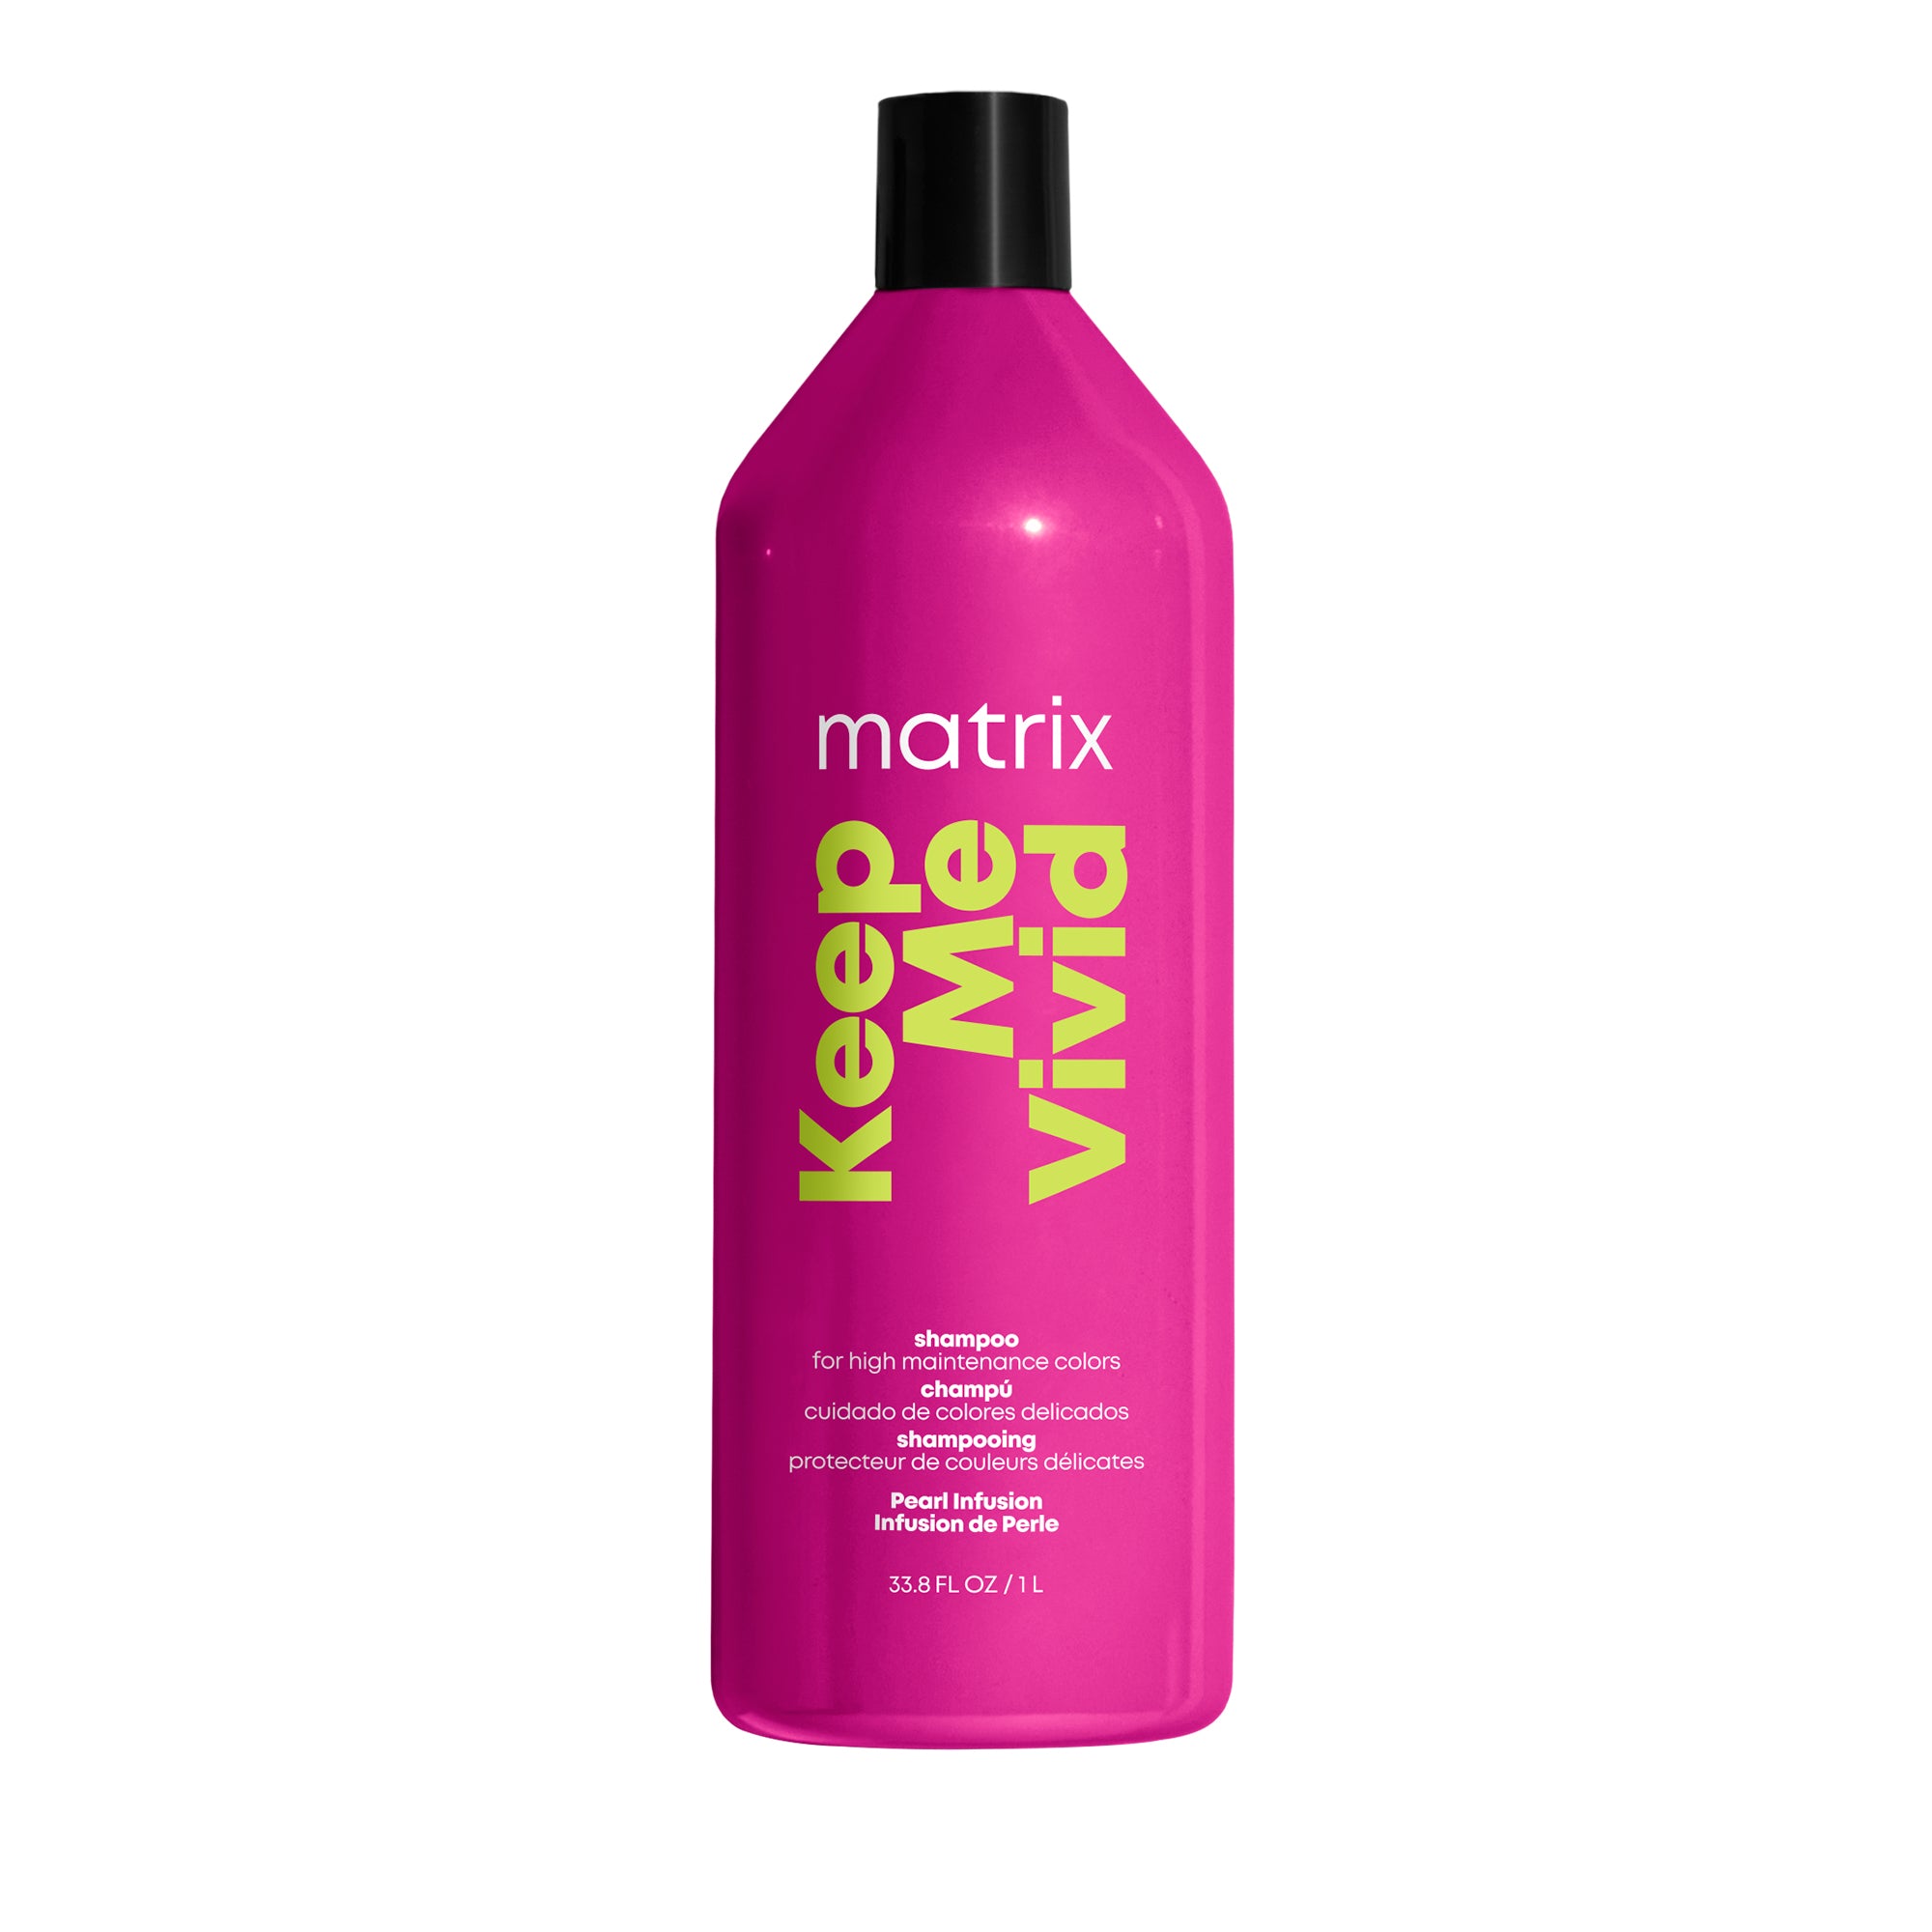 Matrix Keep Me Vivid Shampoo / 33OZ